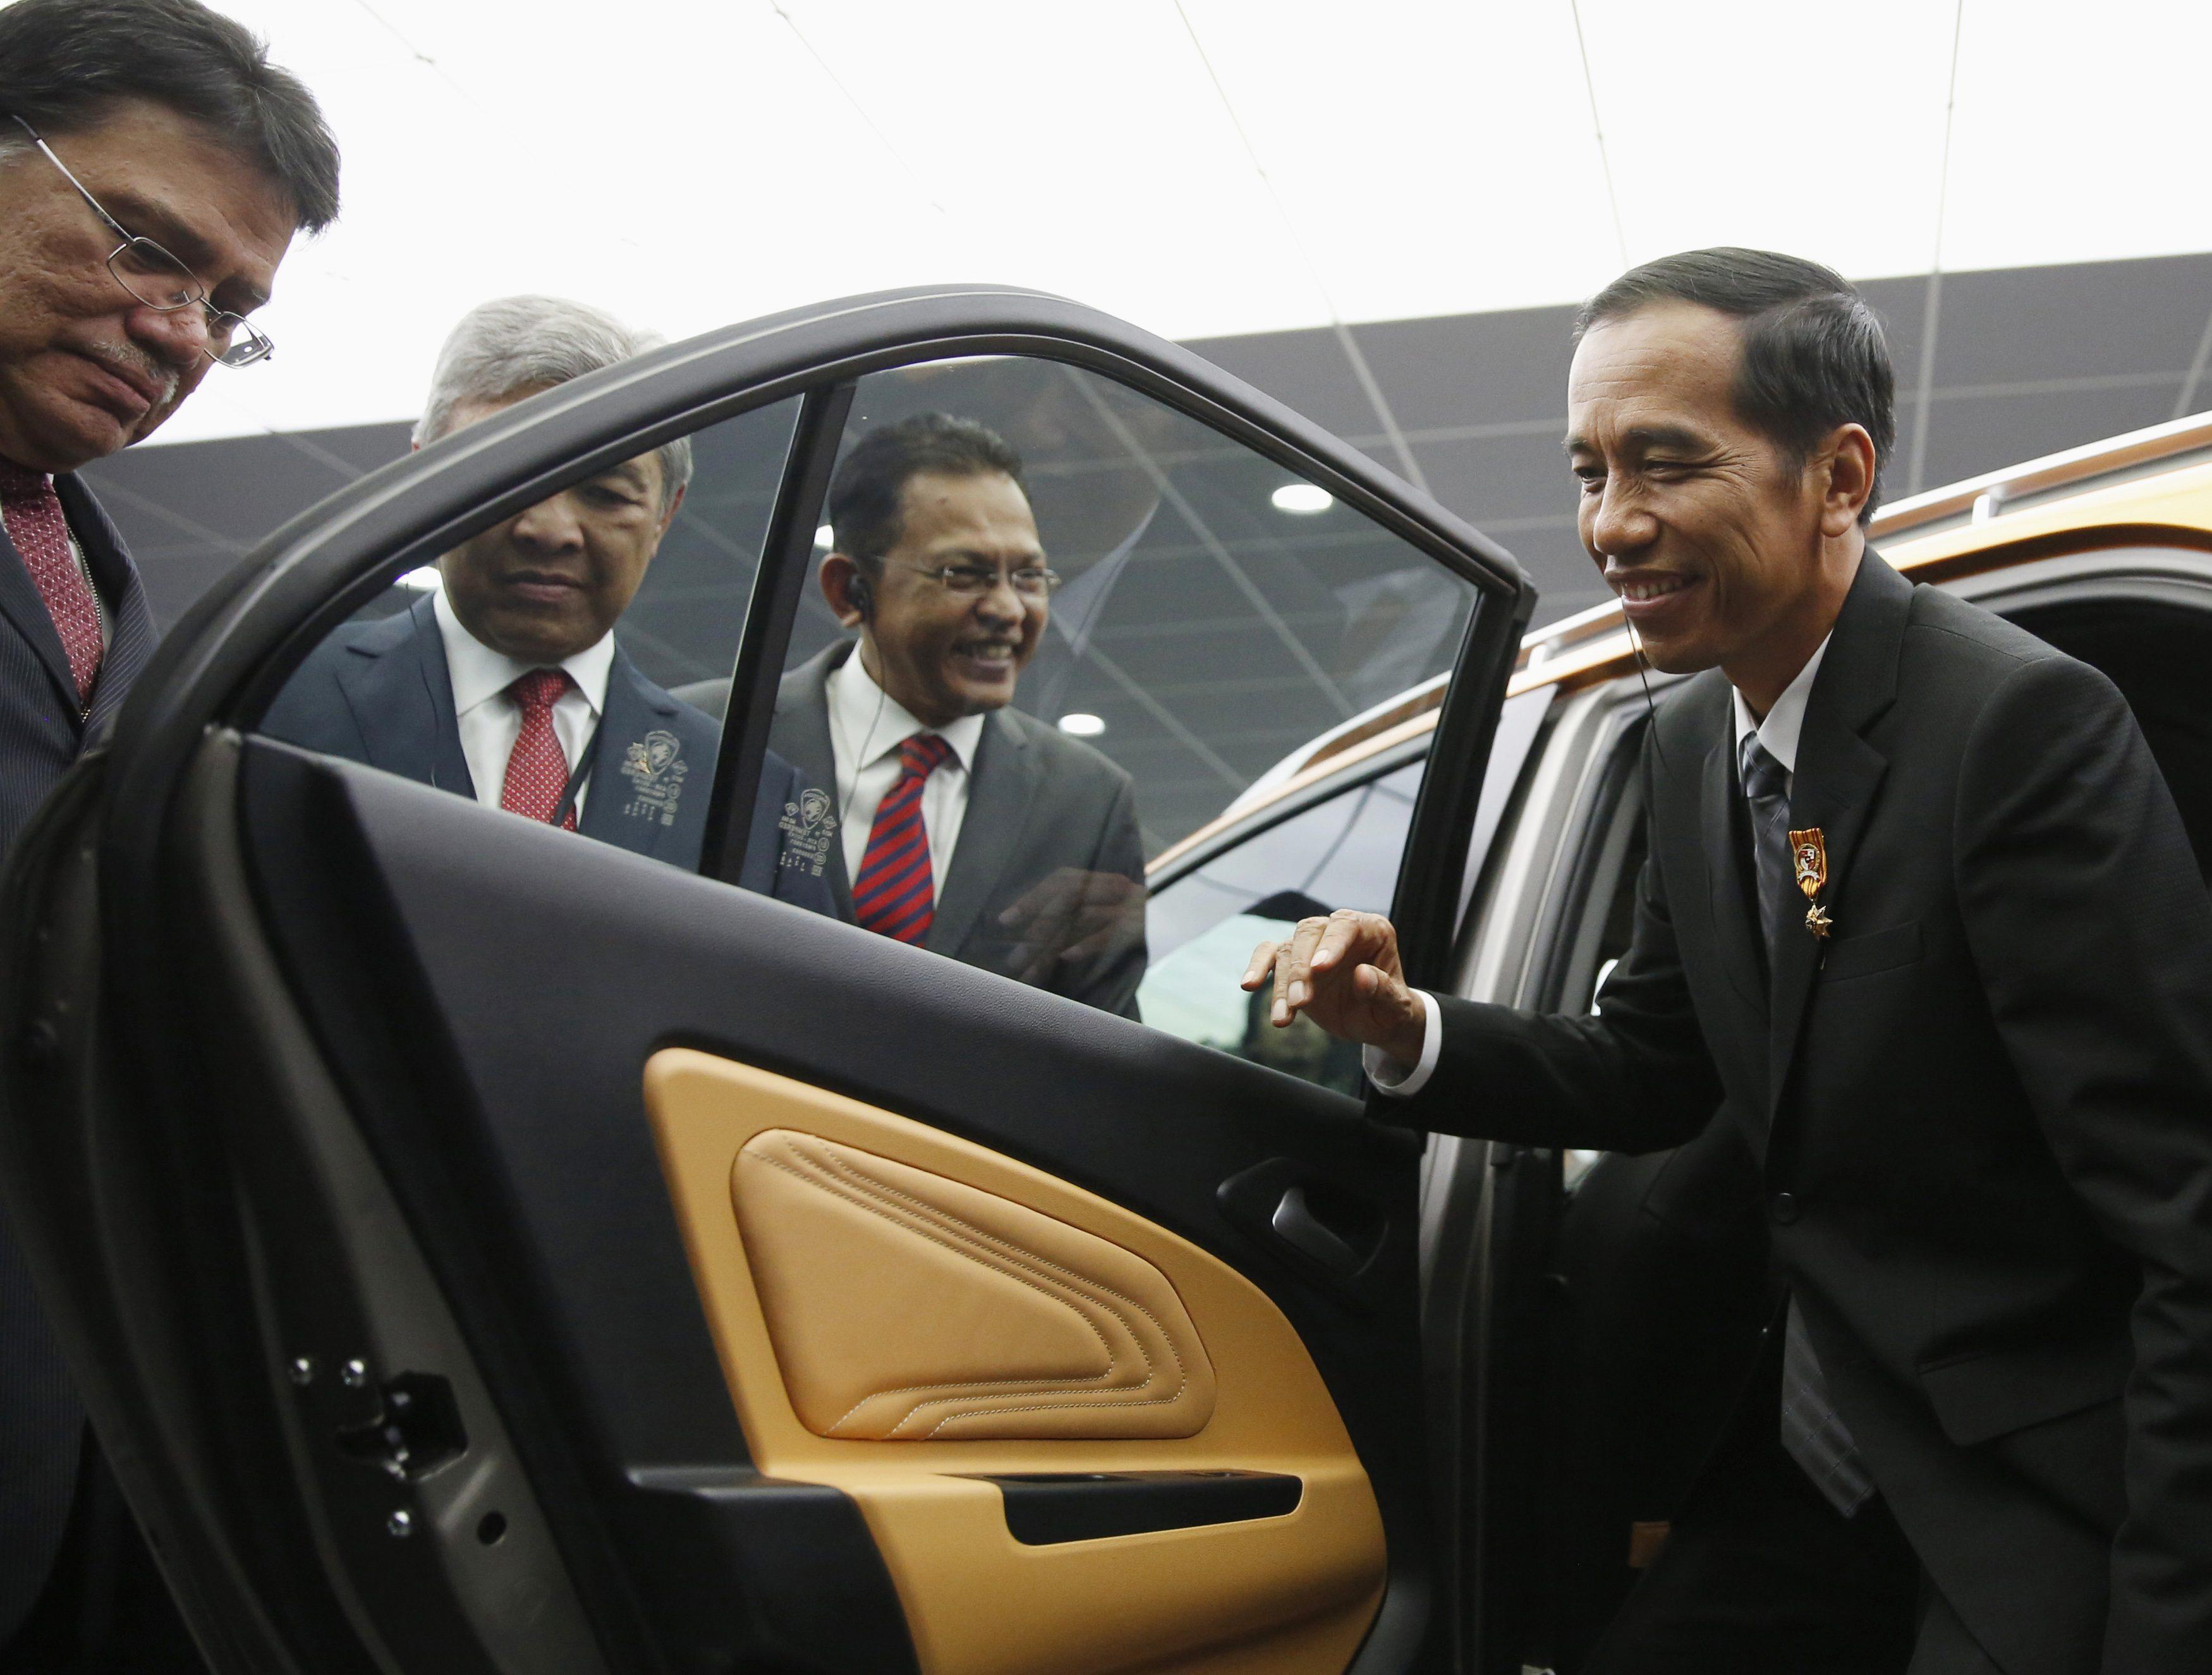 Hadir Dalam Kerja Sama Proton-Adiperkasa; Jokowi: "Saya Datang Karena Diundang"